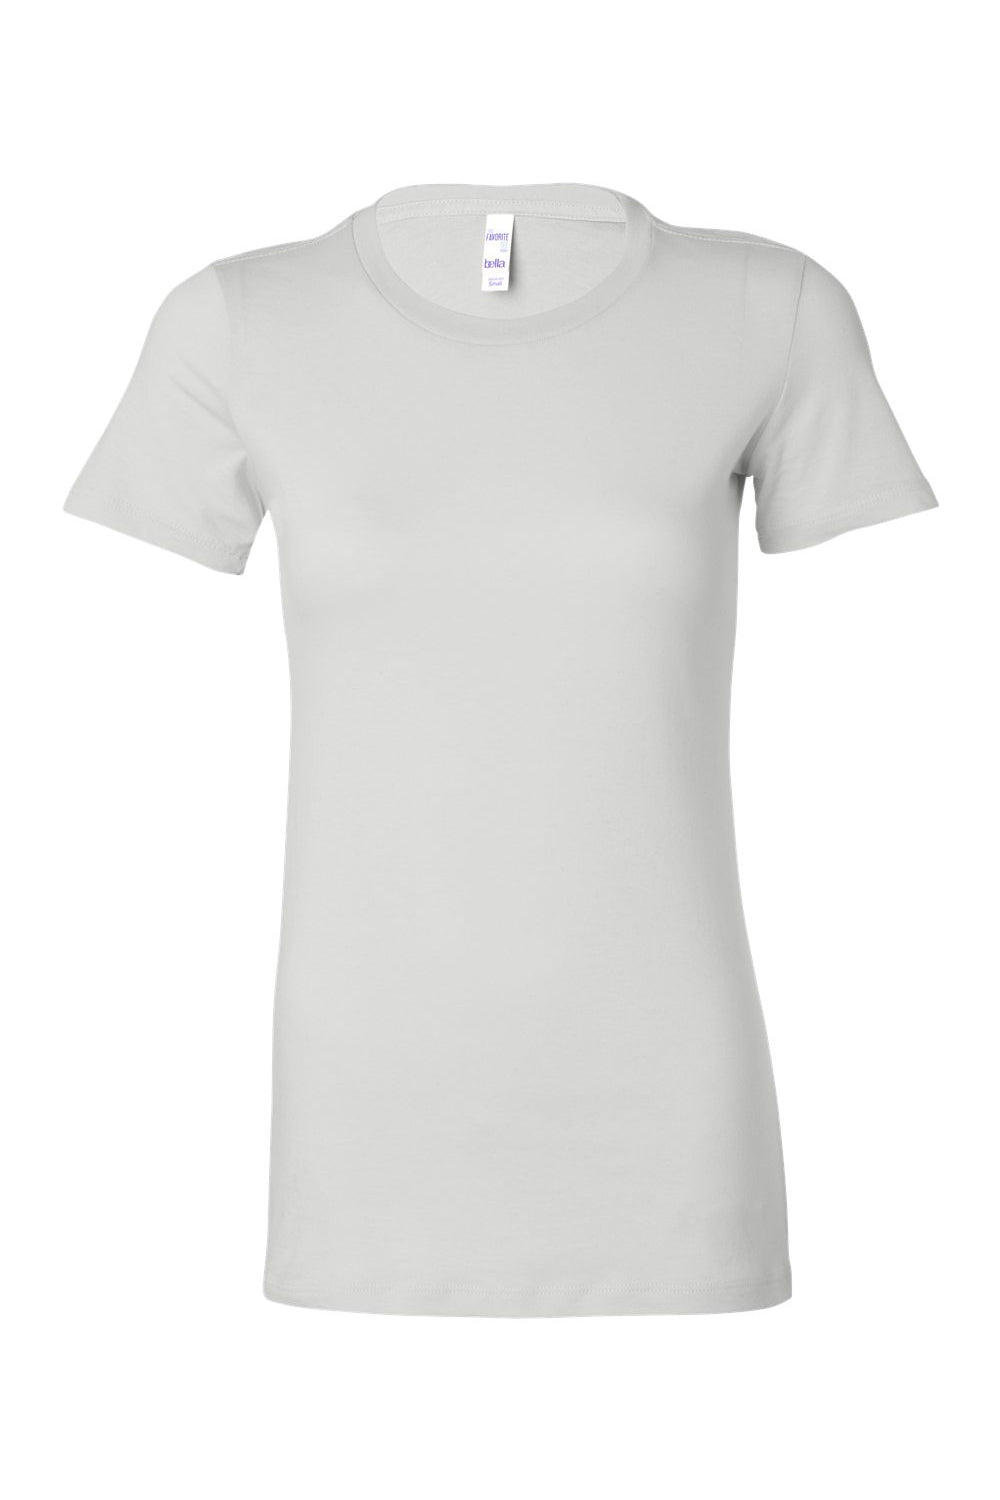 Bella + Canvas BC6004/6004 Womens The Favorite Short Sleeve Crewneck T-Shirt White Flat Front